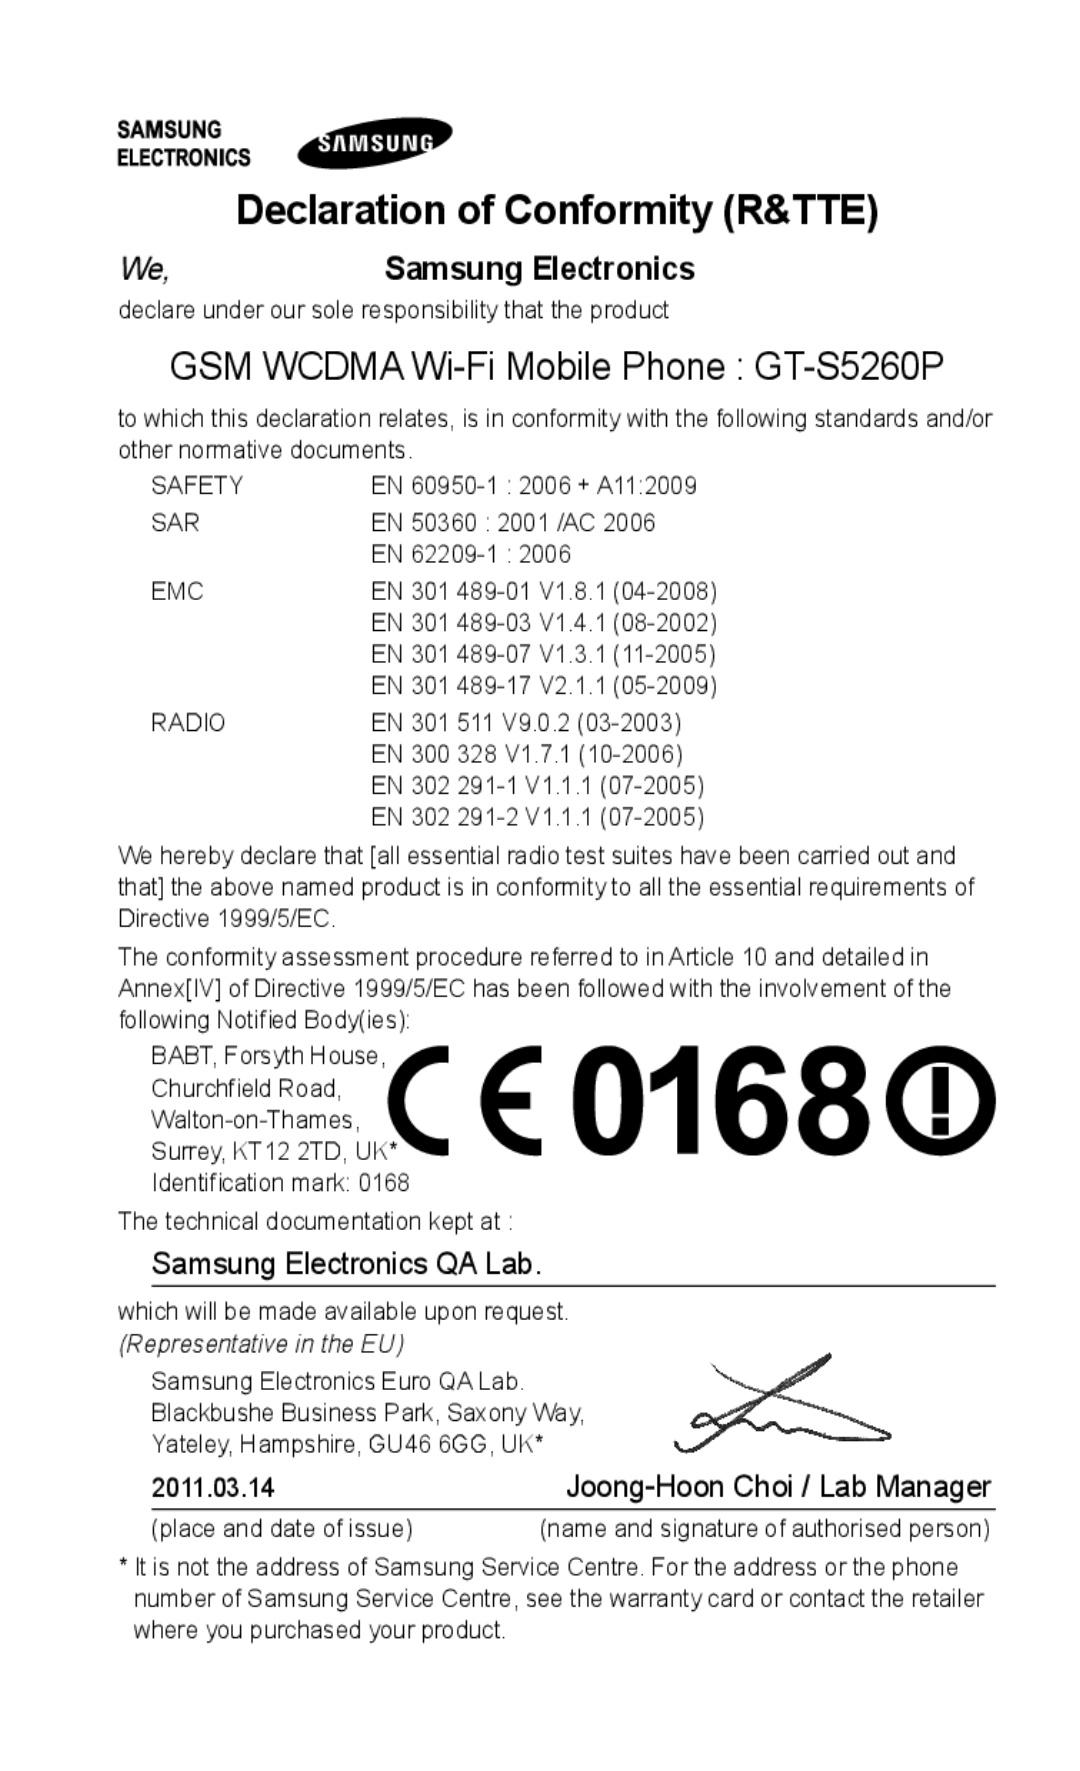 Samsung GT-S5260RWPDBT manual GSM WCDMA Wi-Fi Mobile Phone GT-S5260P, Declaration of Conformity R&TTE, Samsung Electronics 